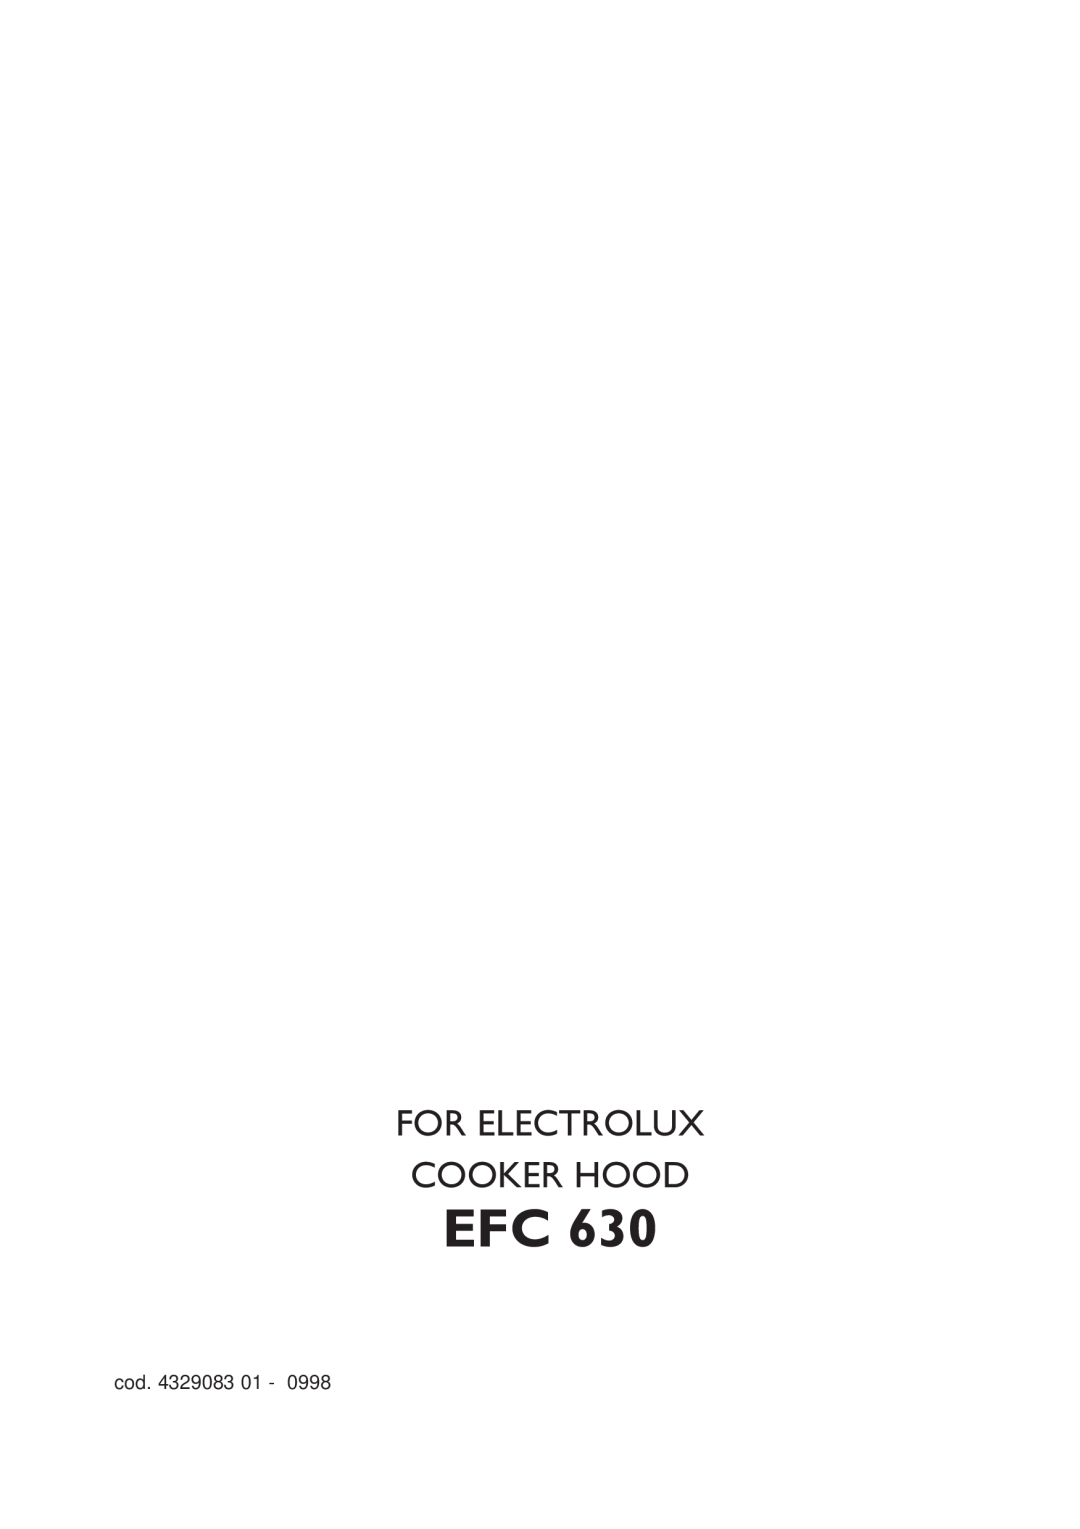 Electrolux EFC 630 manual For Electrolux, Cooker Hood 